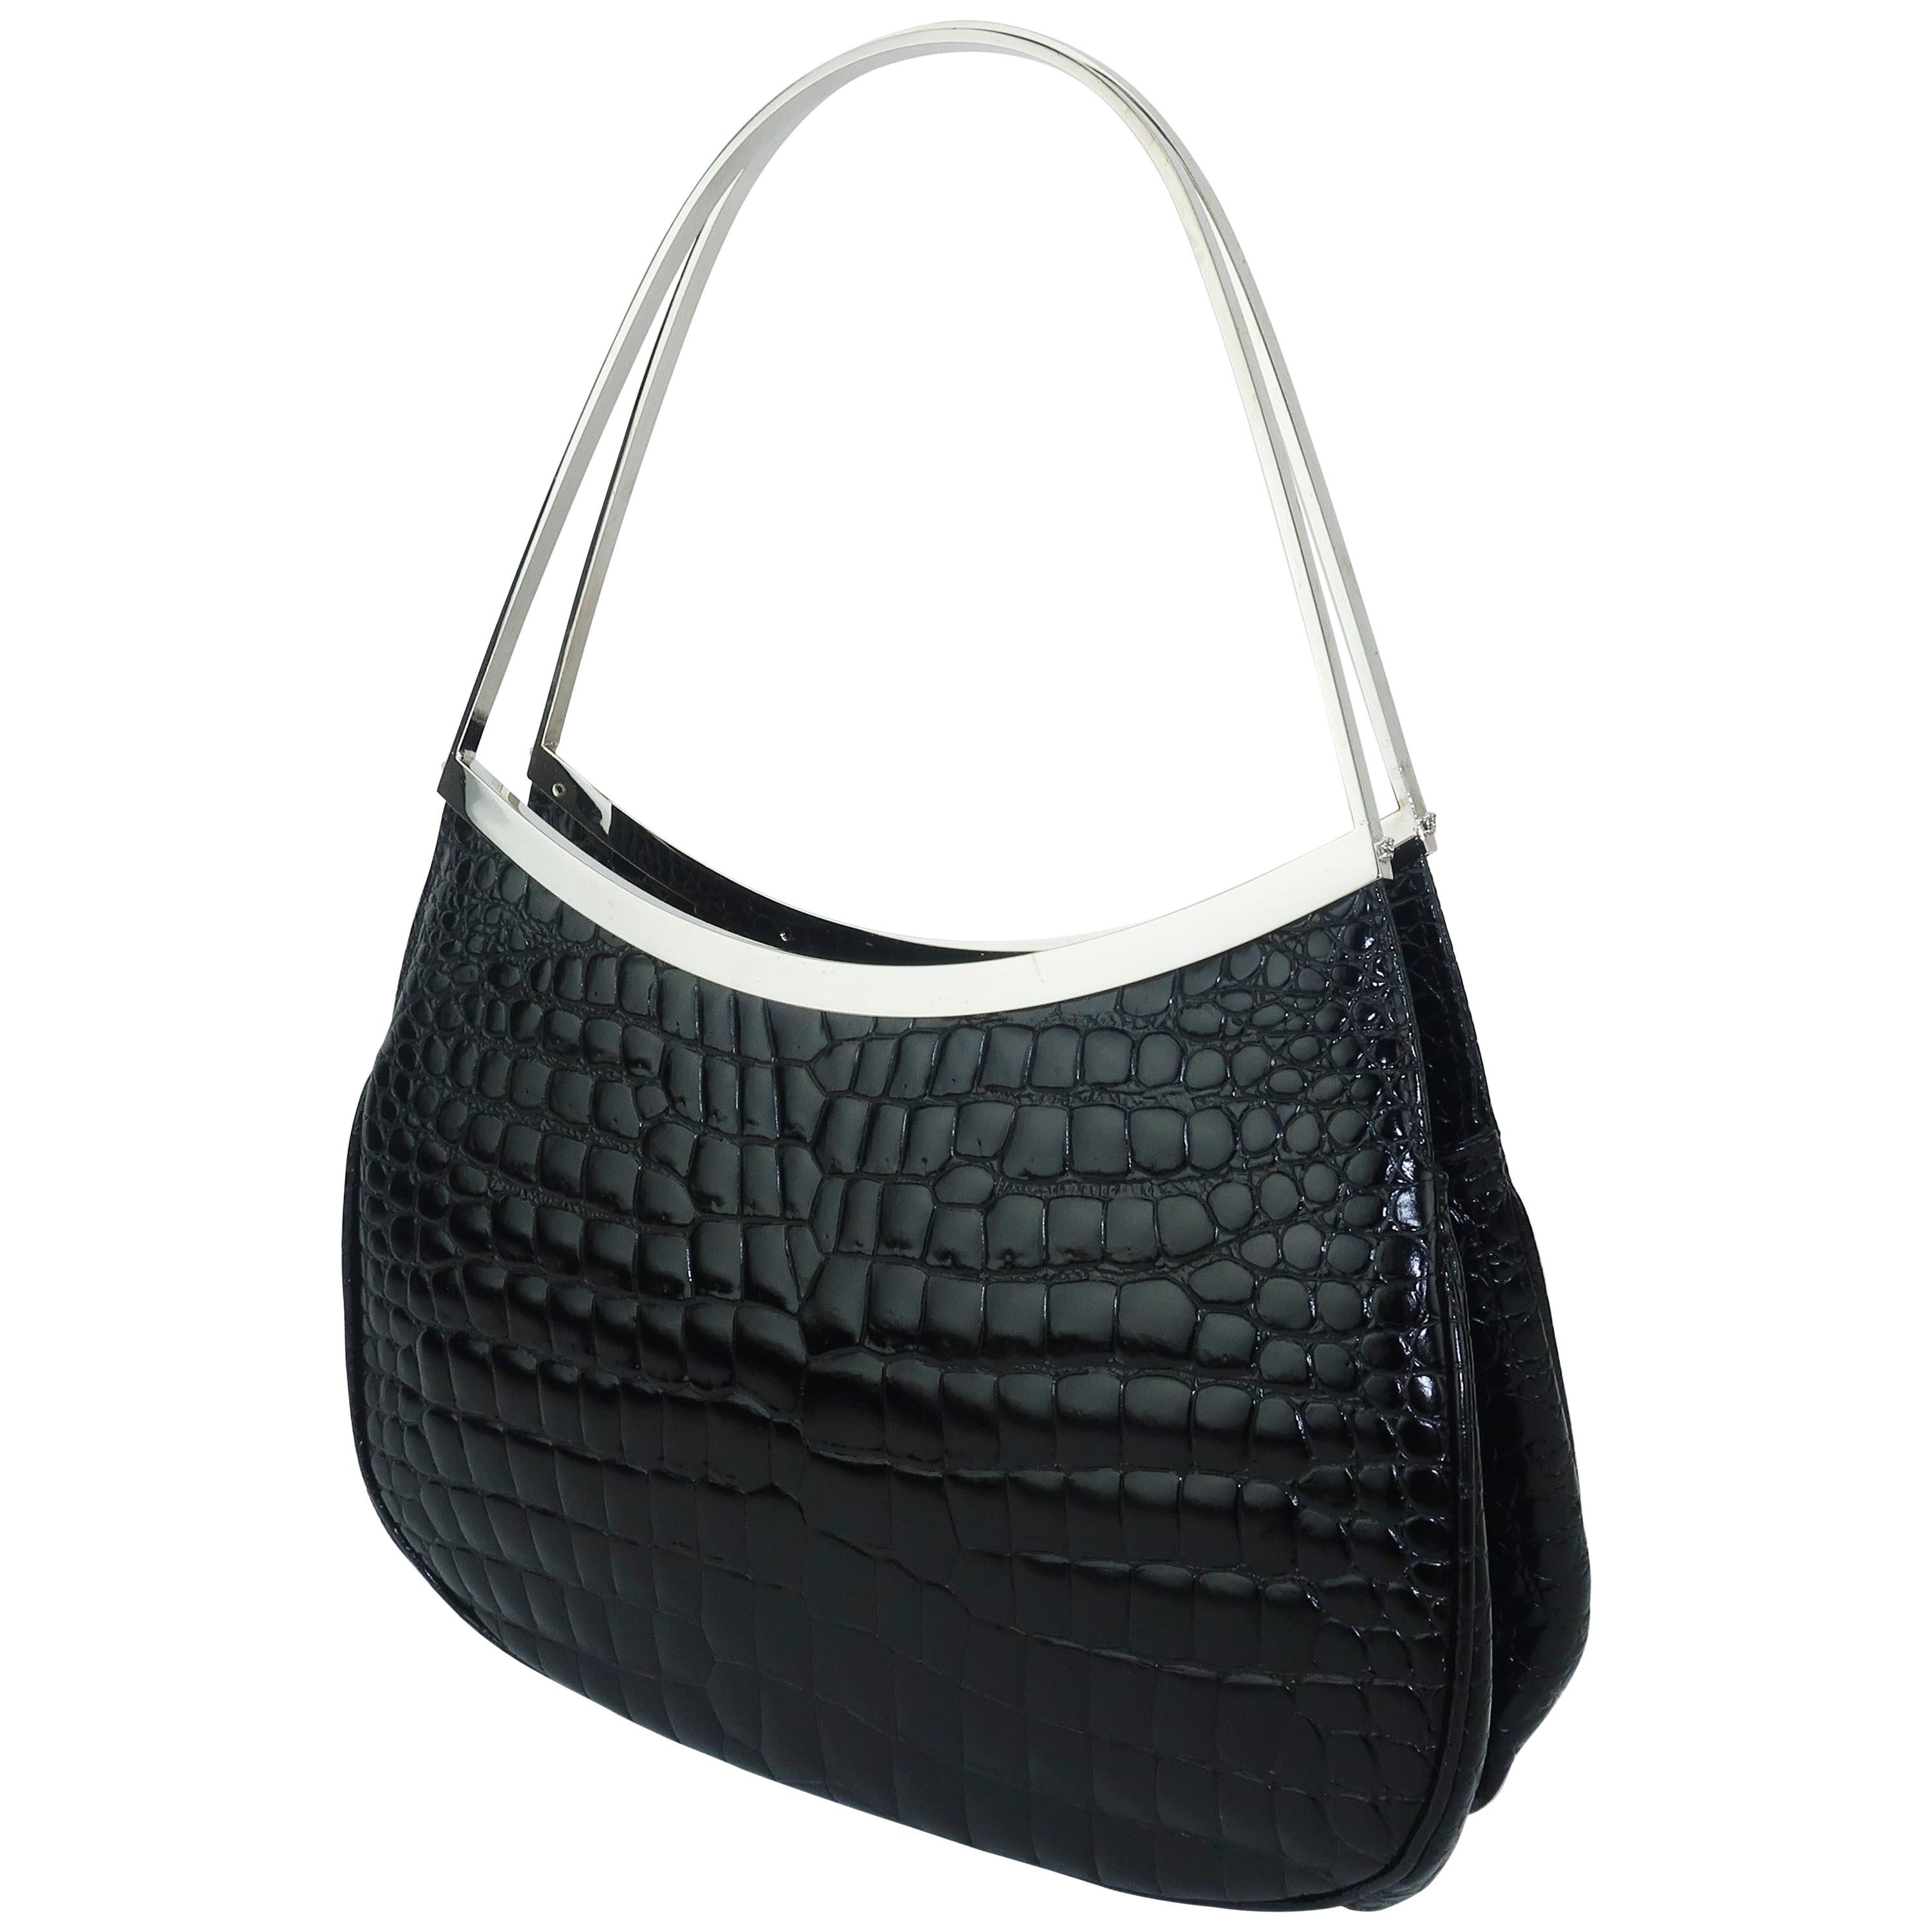 Vintage Versace Black Croc Embossed Leather Handbag With Unique Handles